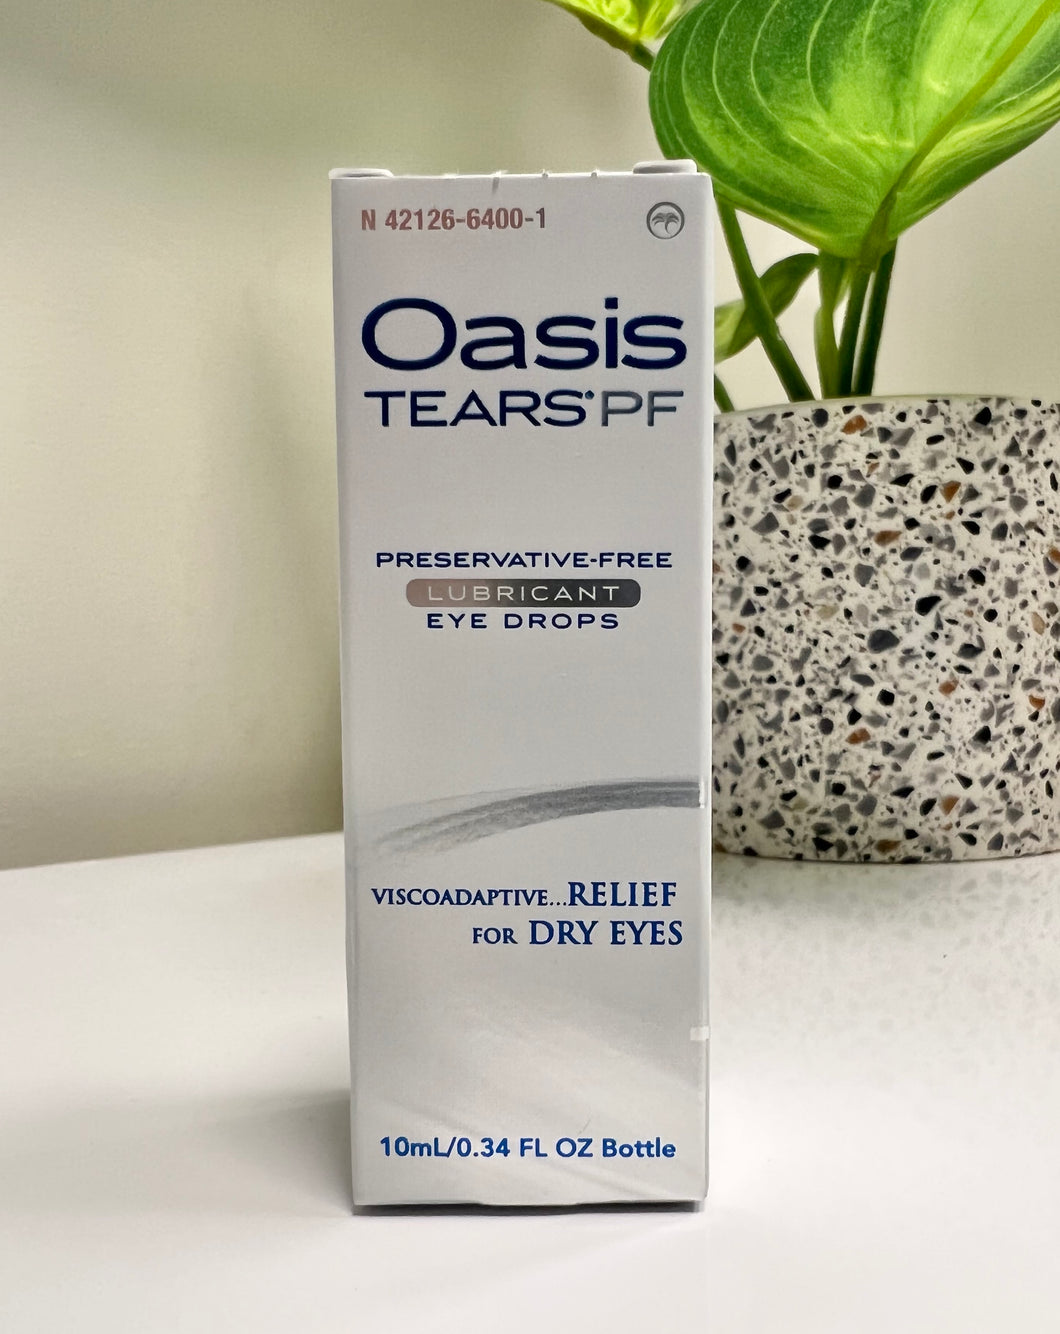 Oasis Tears PF Preservative-Free Lubricant Eye Drops (10mL)